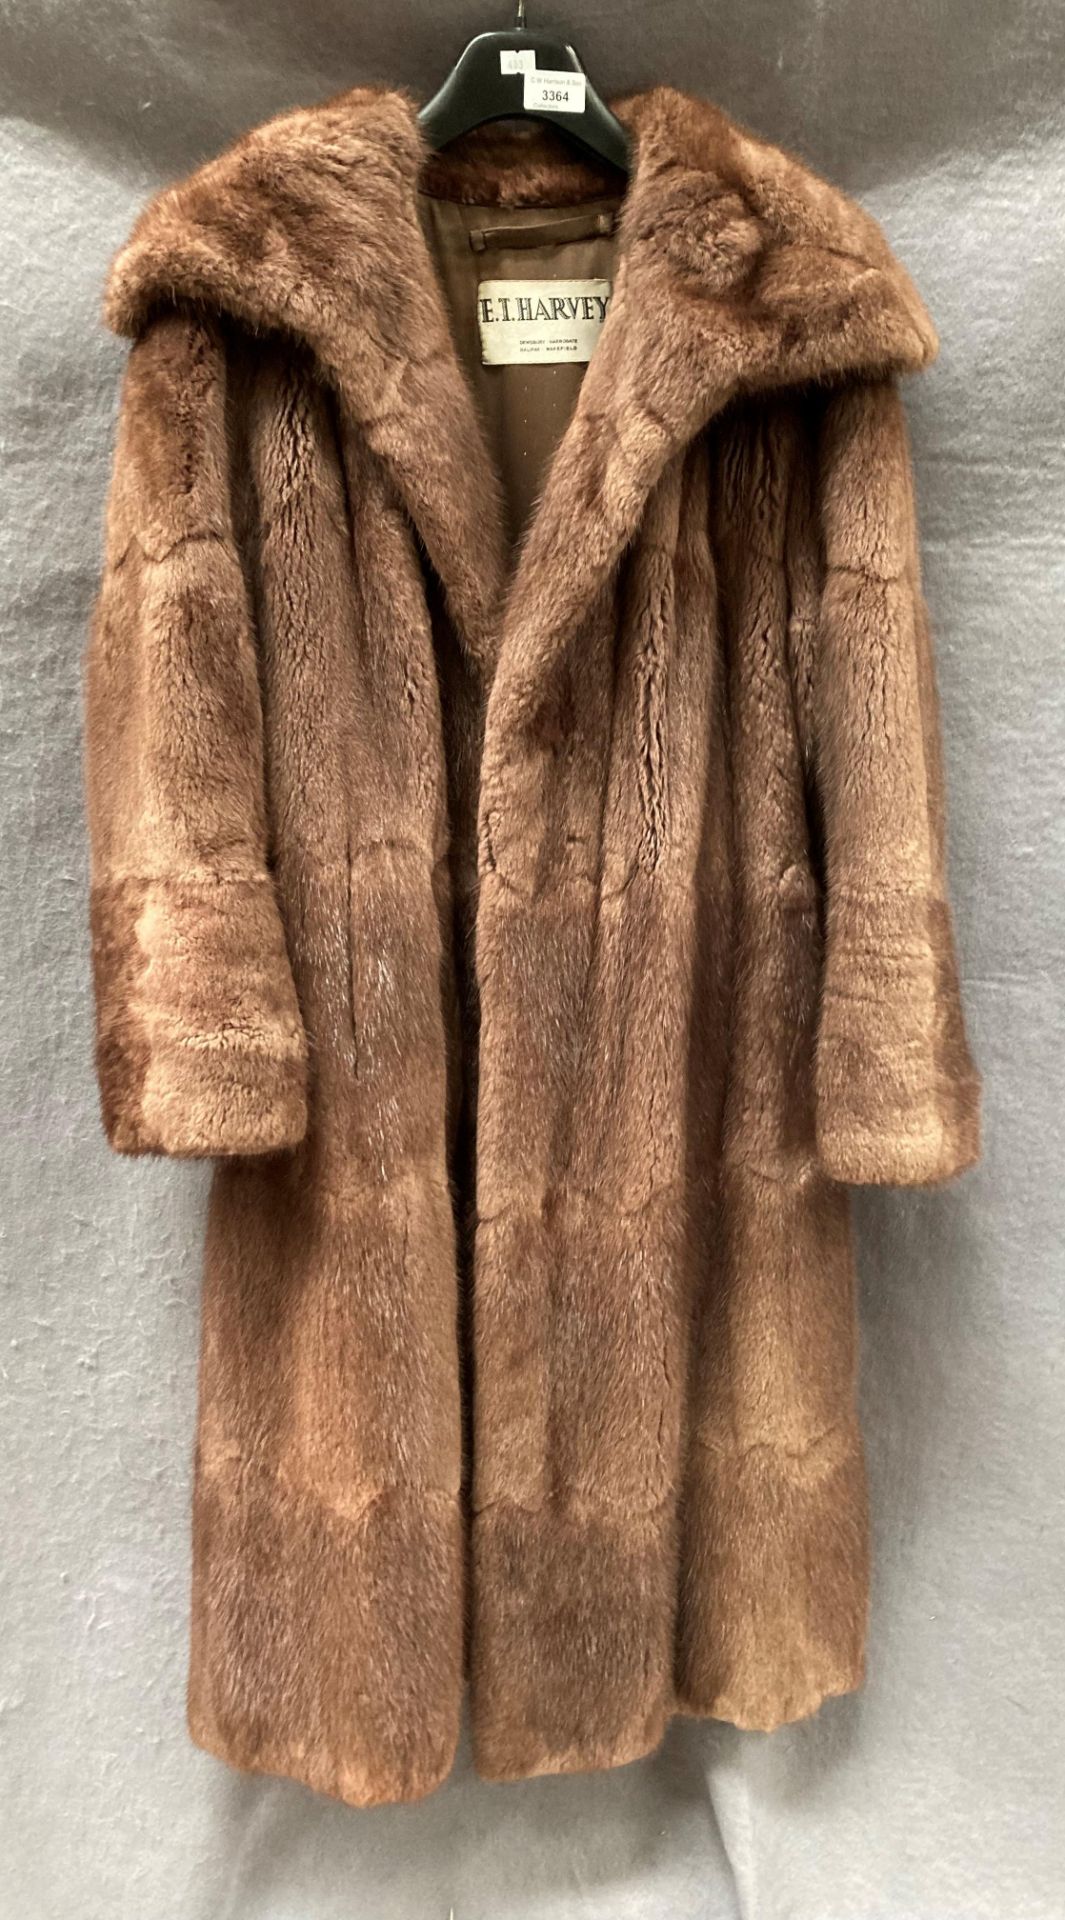 E T Harvey Ltd light brown fur long coat Further Information Staining to both lapels